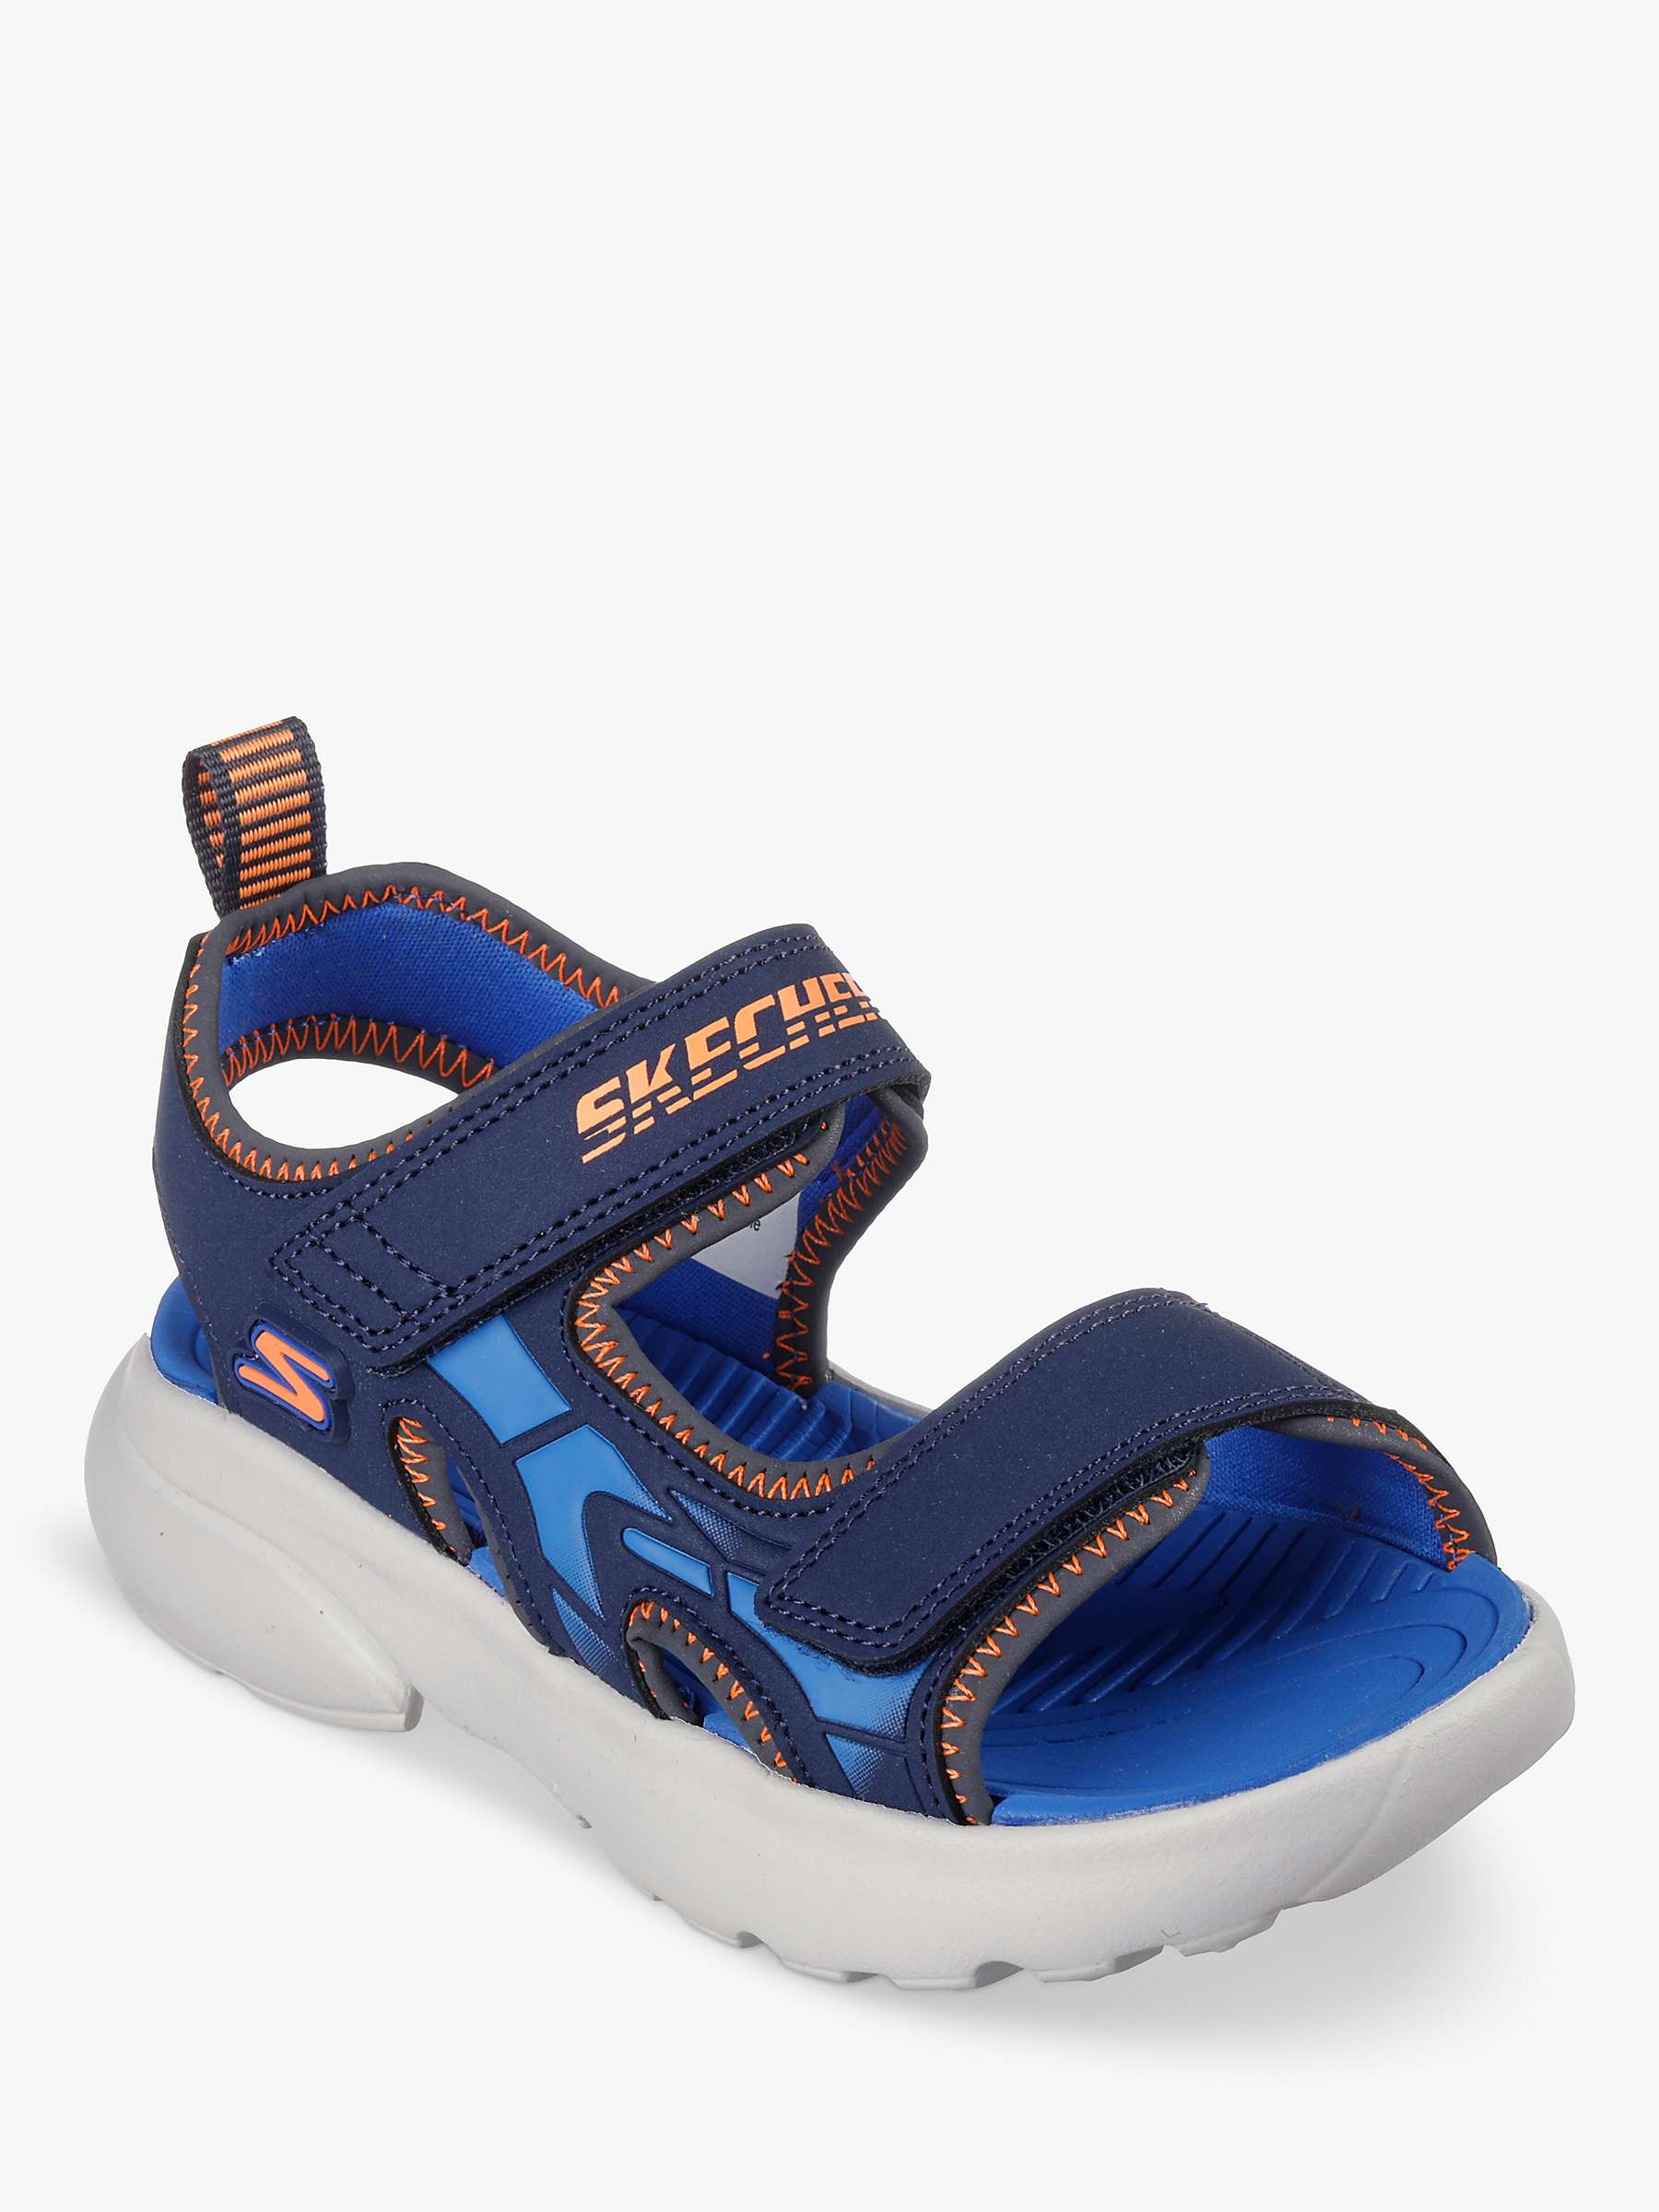 Buy Skechers Kids' Razor Splash Sandals, Blue Online at johnlewis.com